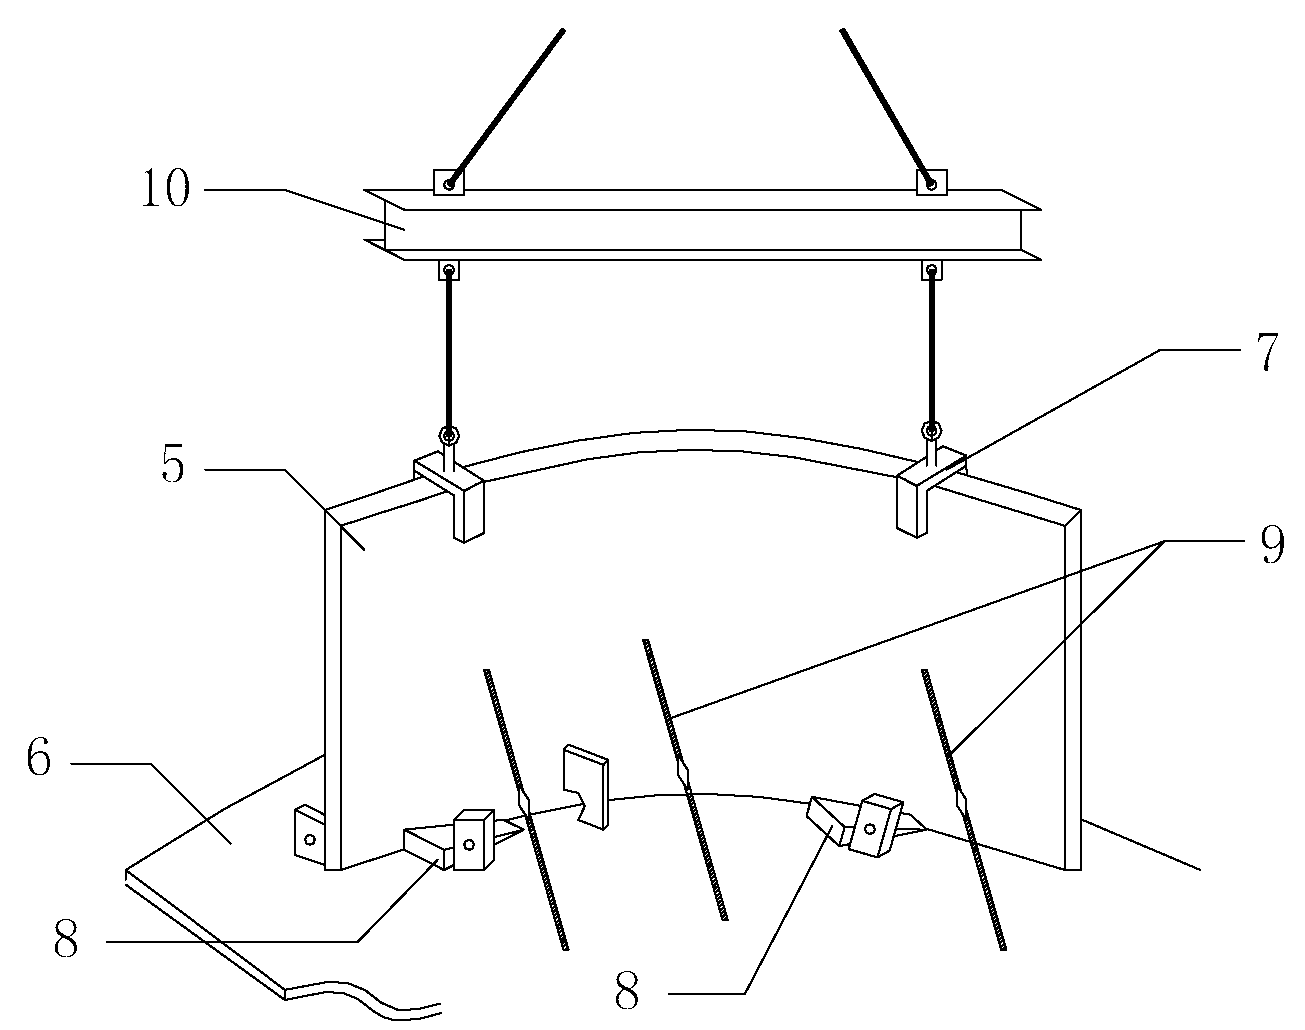 Tank fabricating and welding method